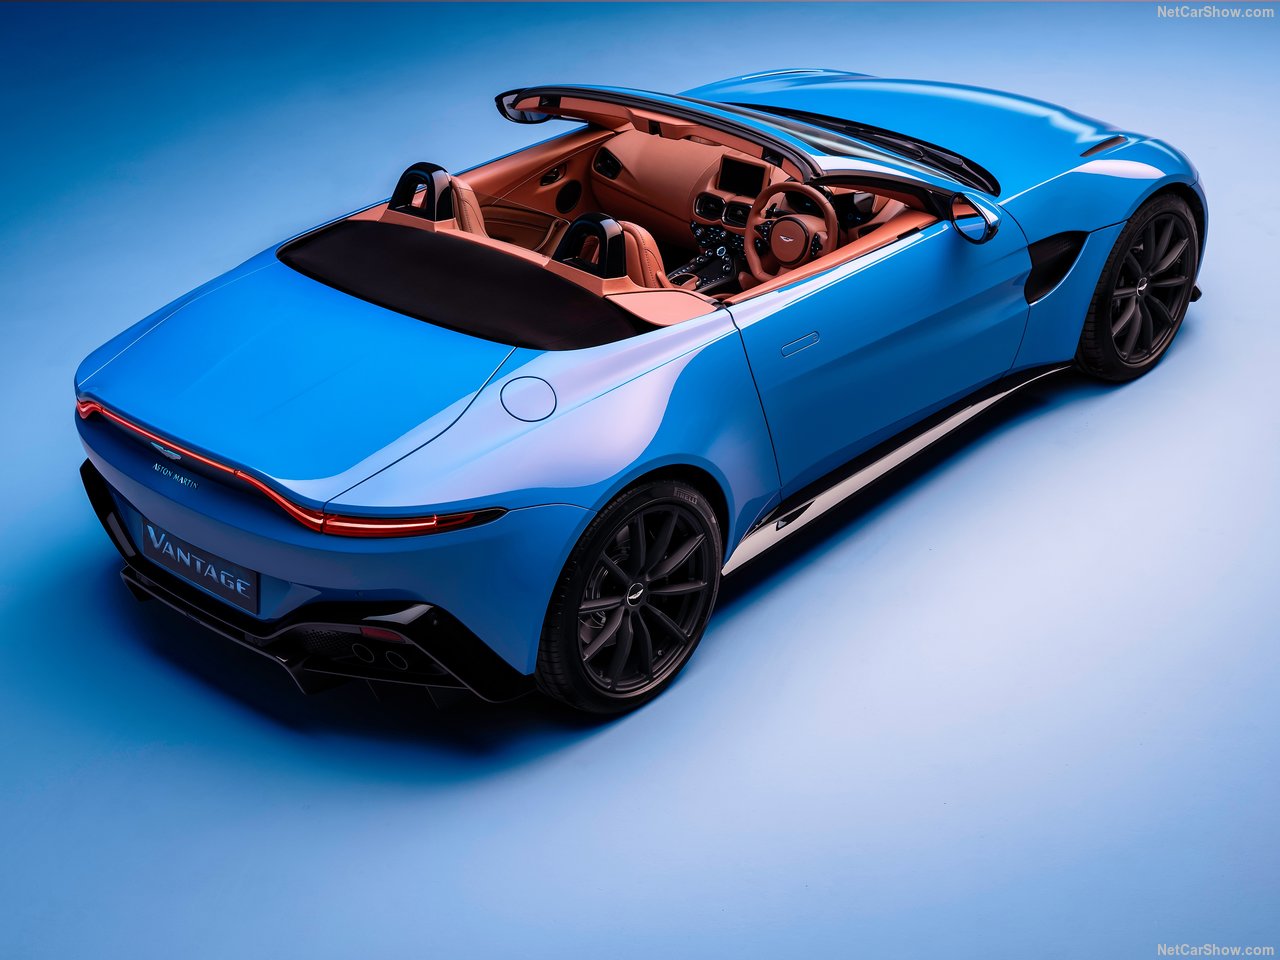 Aυστηρά διθέσιο το νέο ανοιχτό μοντέλο της Aston Martin.